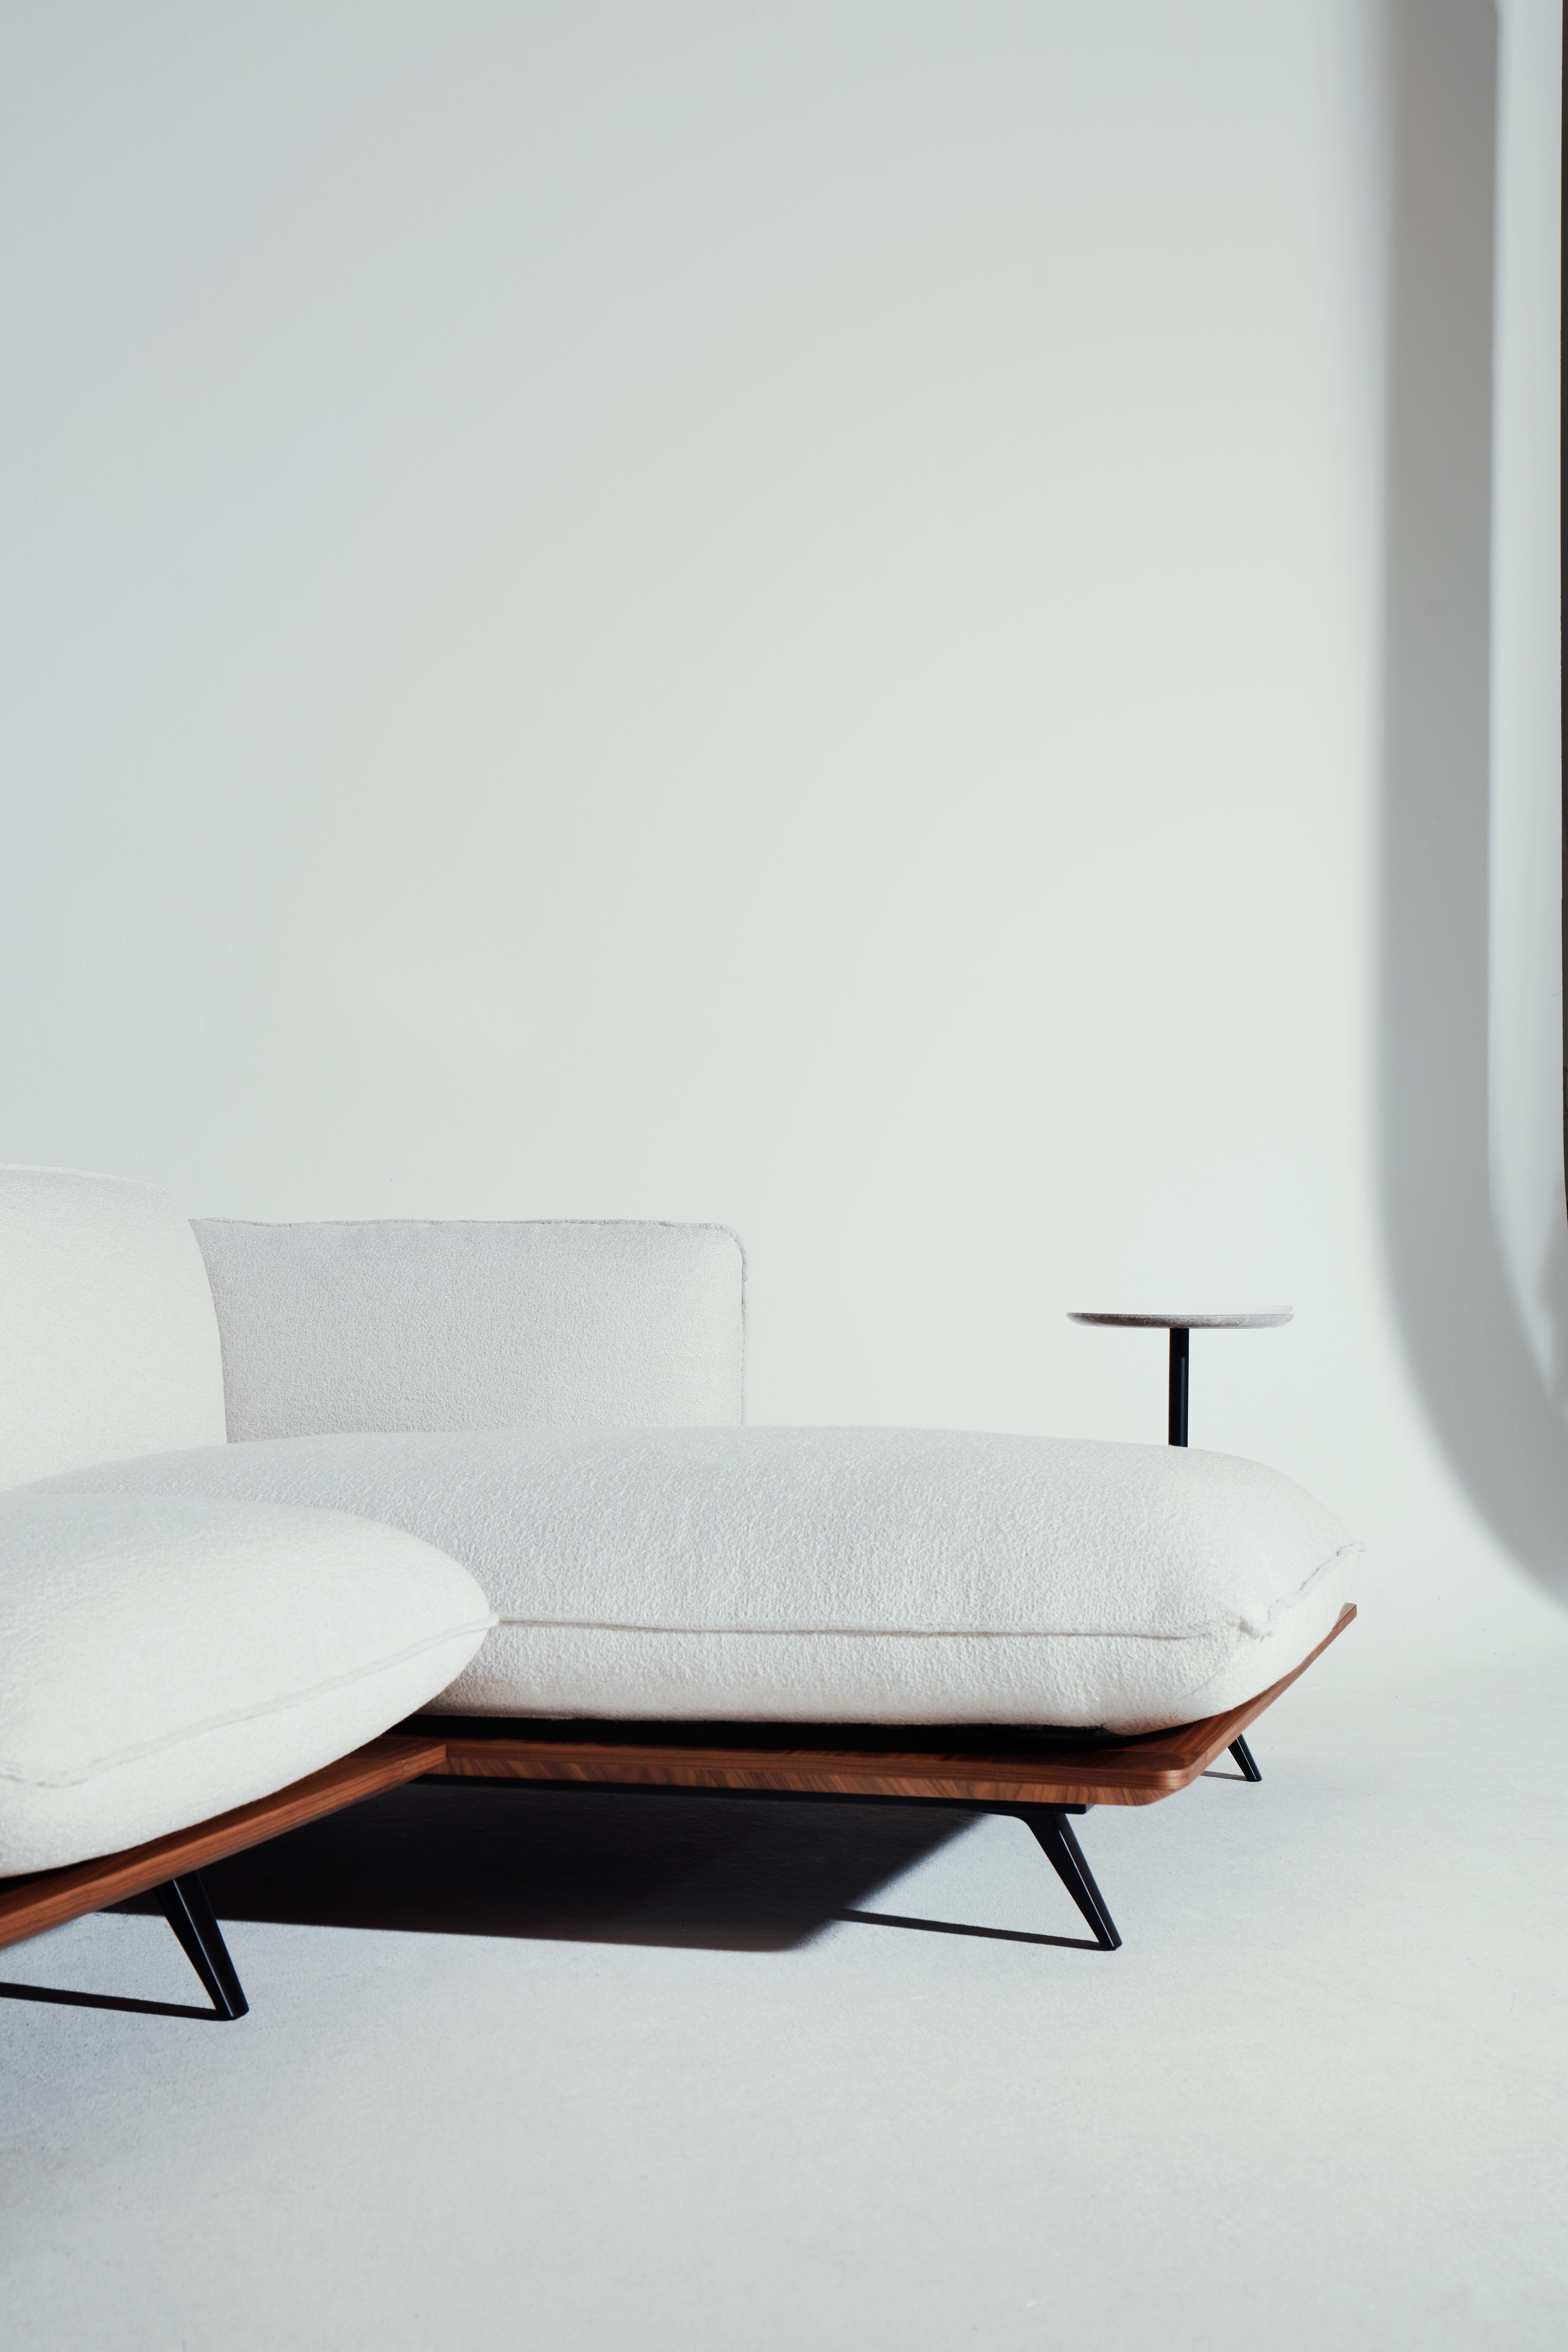 Post-Modern Sahara Sofa by Noé Duchaufour Lawrance